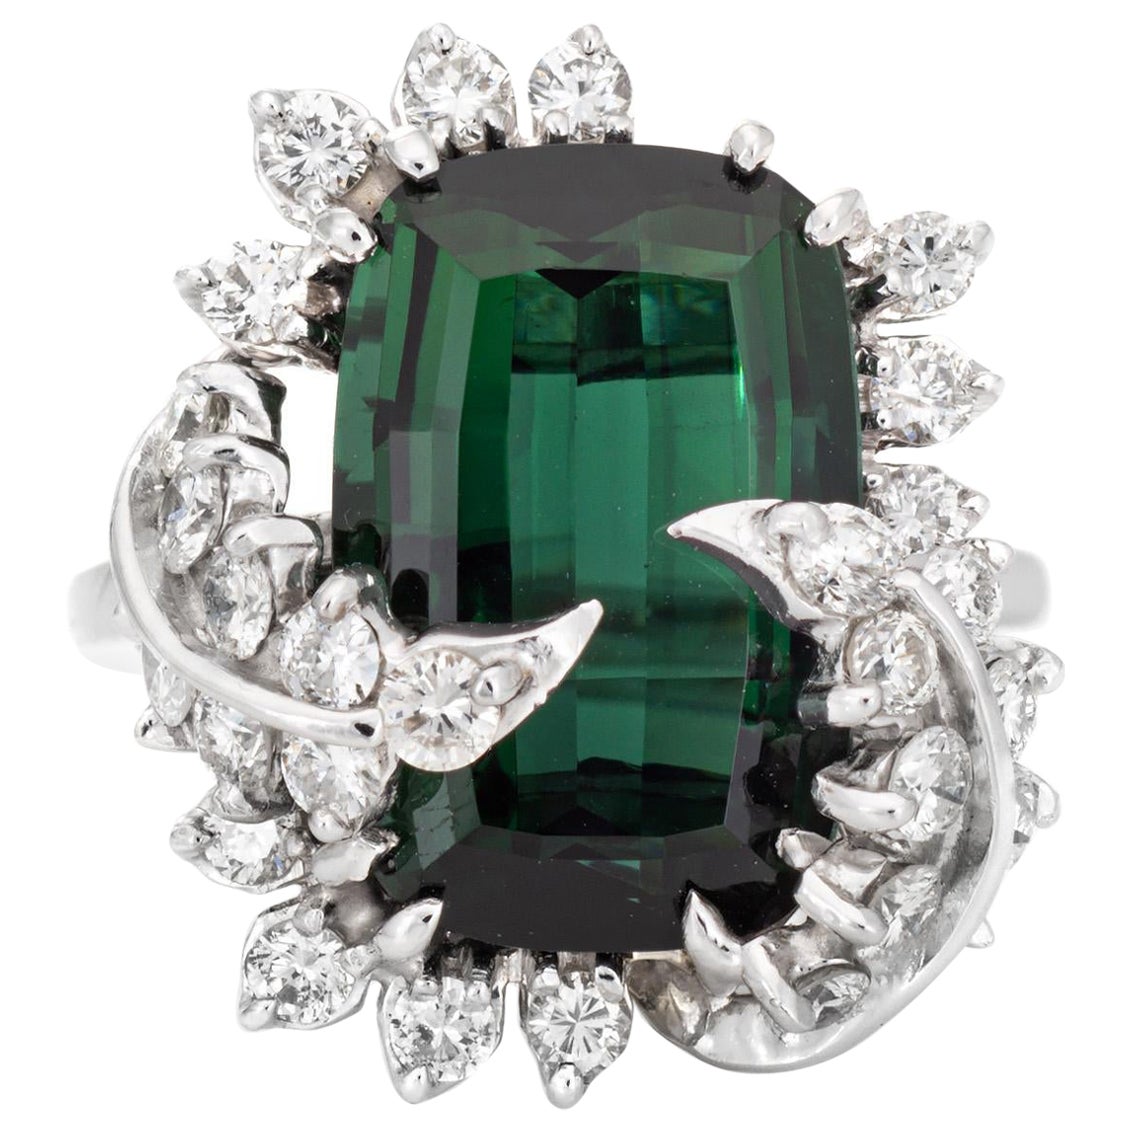 7ct Green Tourmaline Diamond Leaf Ring Vintage 14k White Gold Sz 4.75 Jewelry For Sale